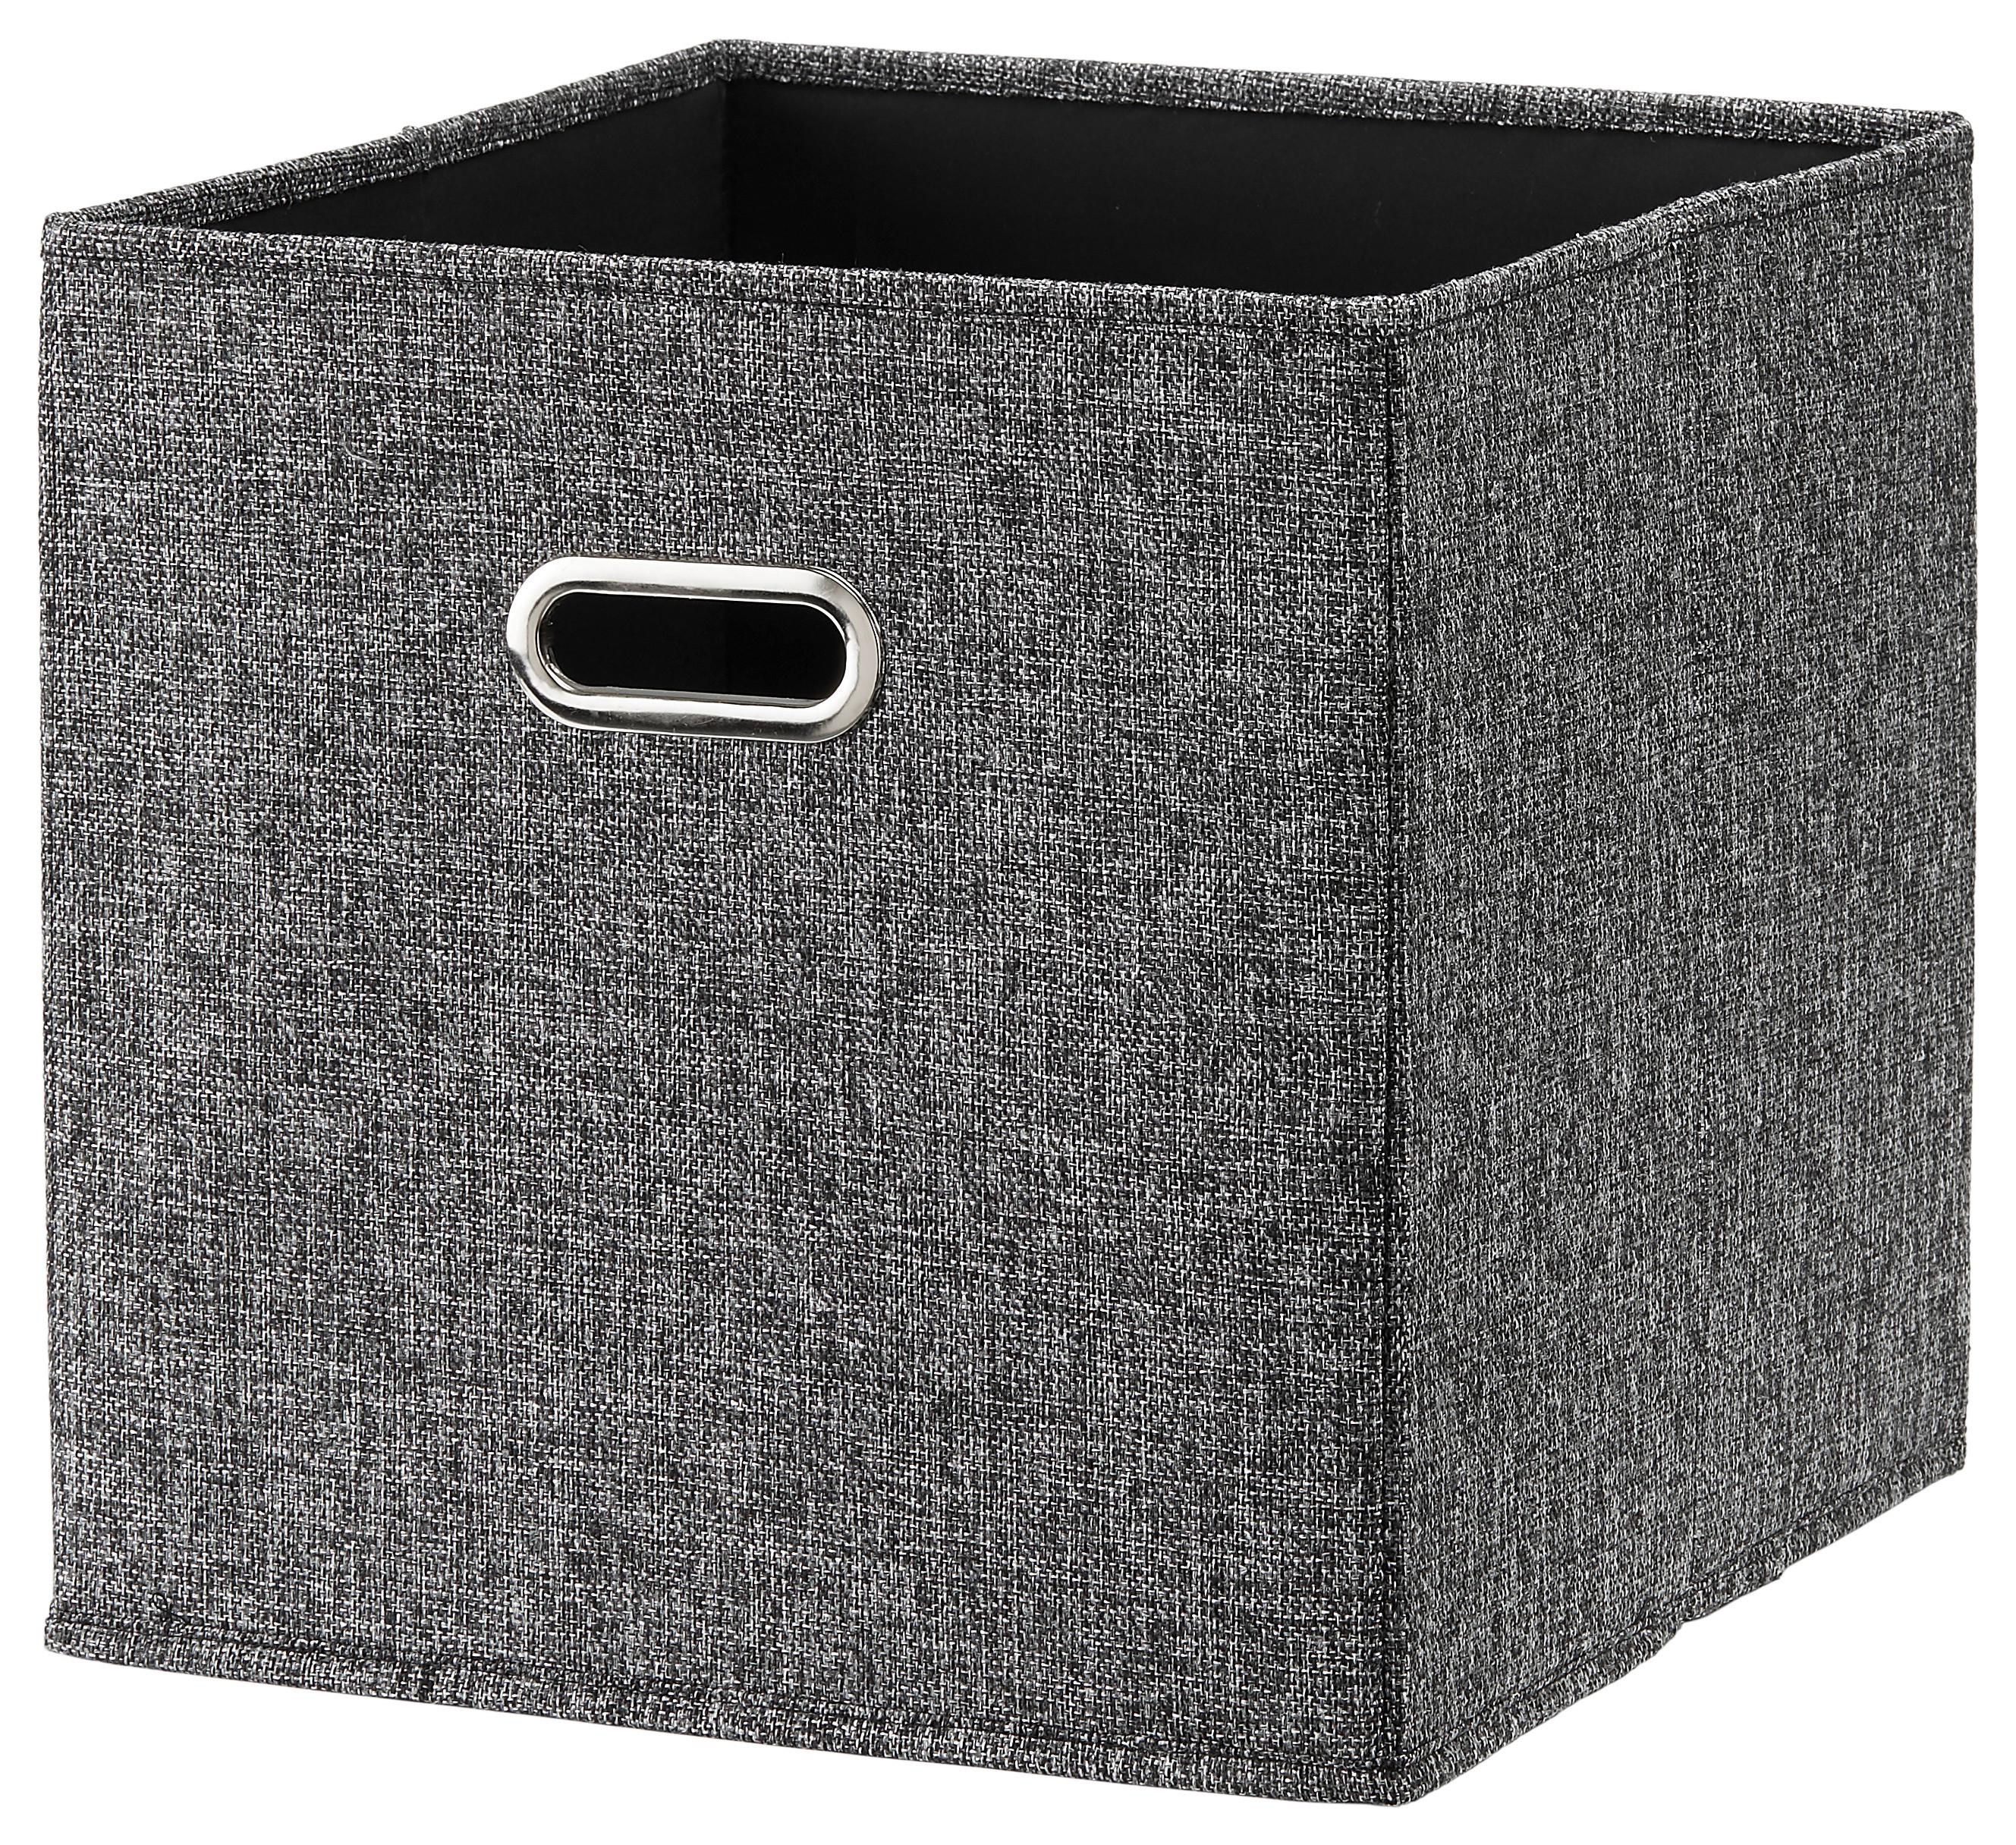 Faltbox Bobby ca. 34l - Schwarz, MODERN, Karton/Textil (33/32/33cm) - Premium Living